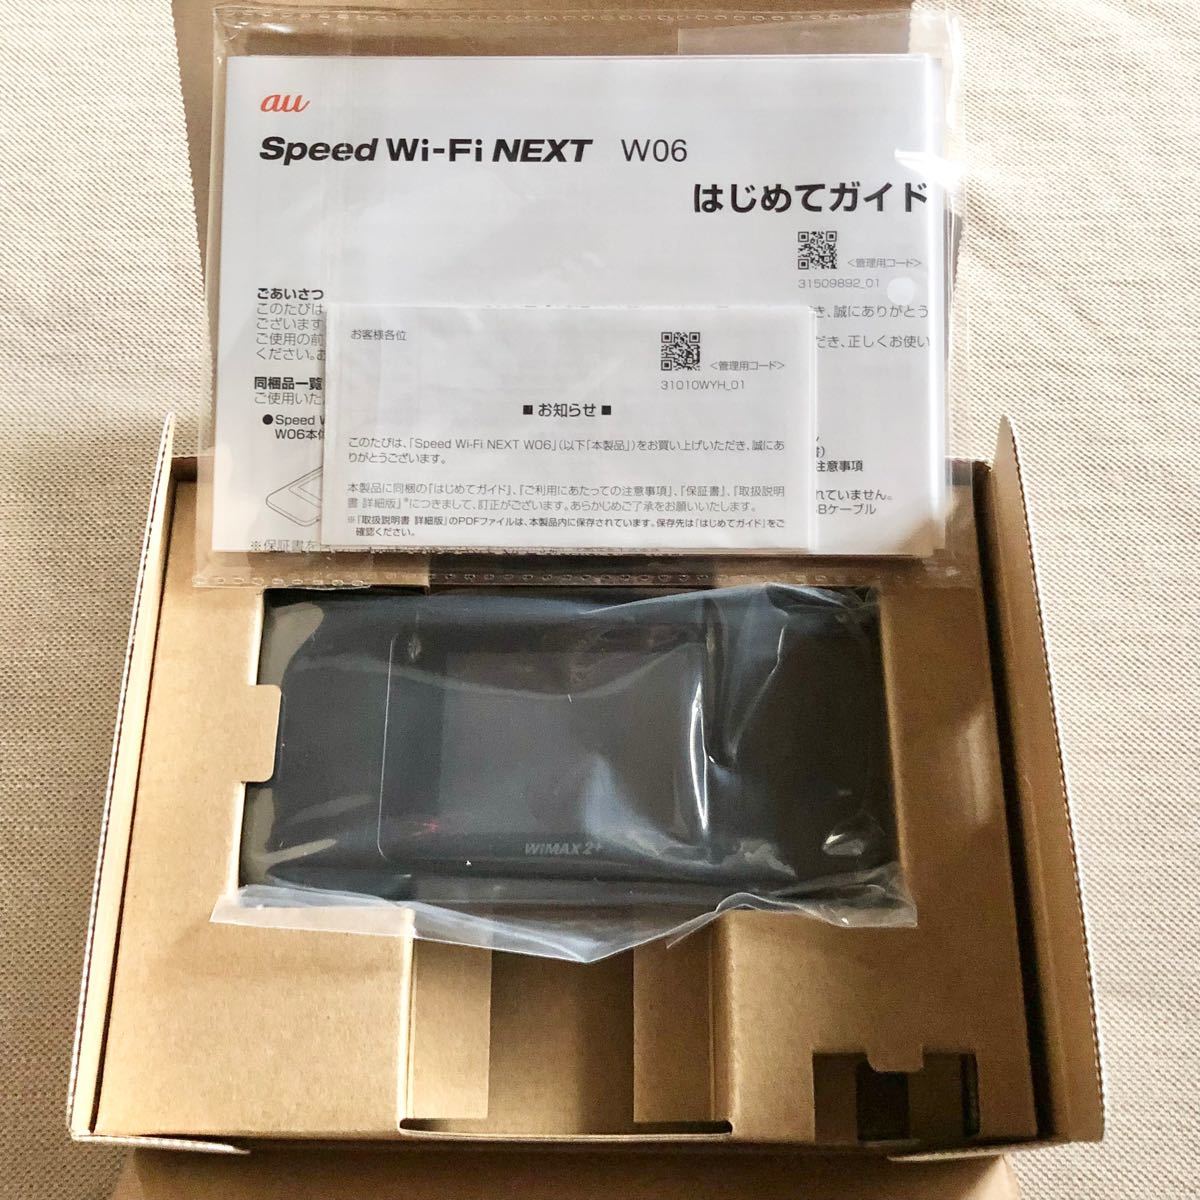 WiMAX 2+ Speed Wi-Fi NEXT W06【ブラック】